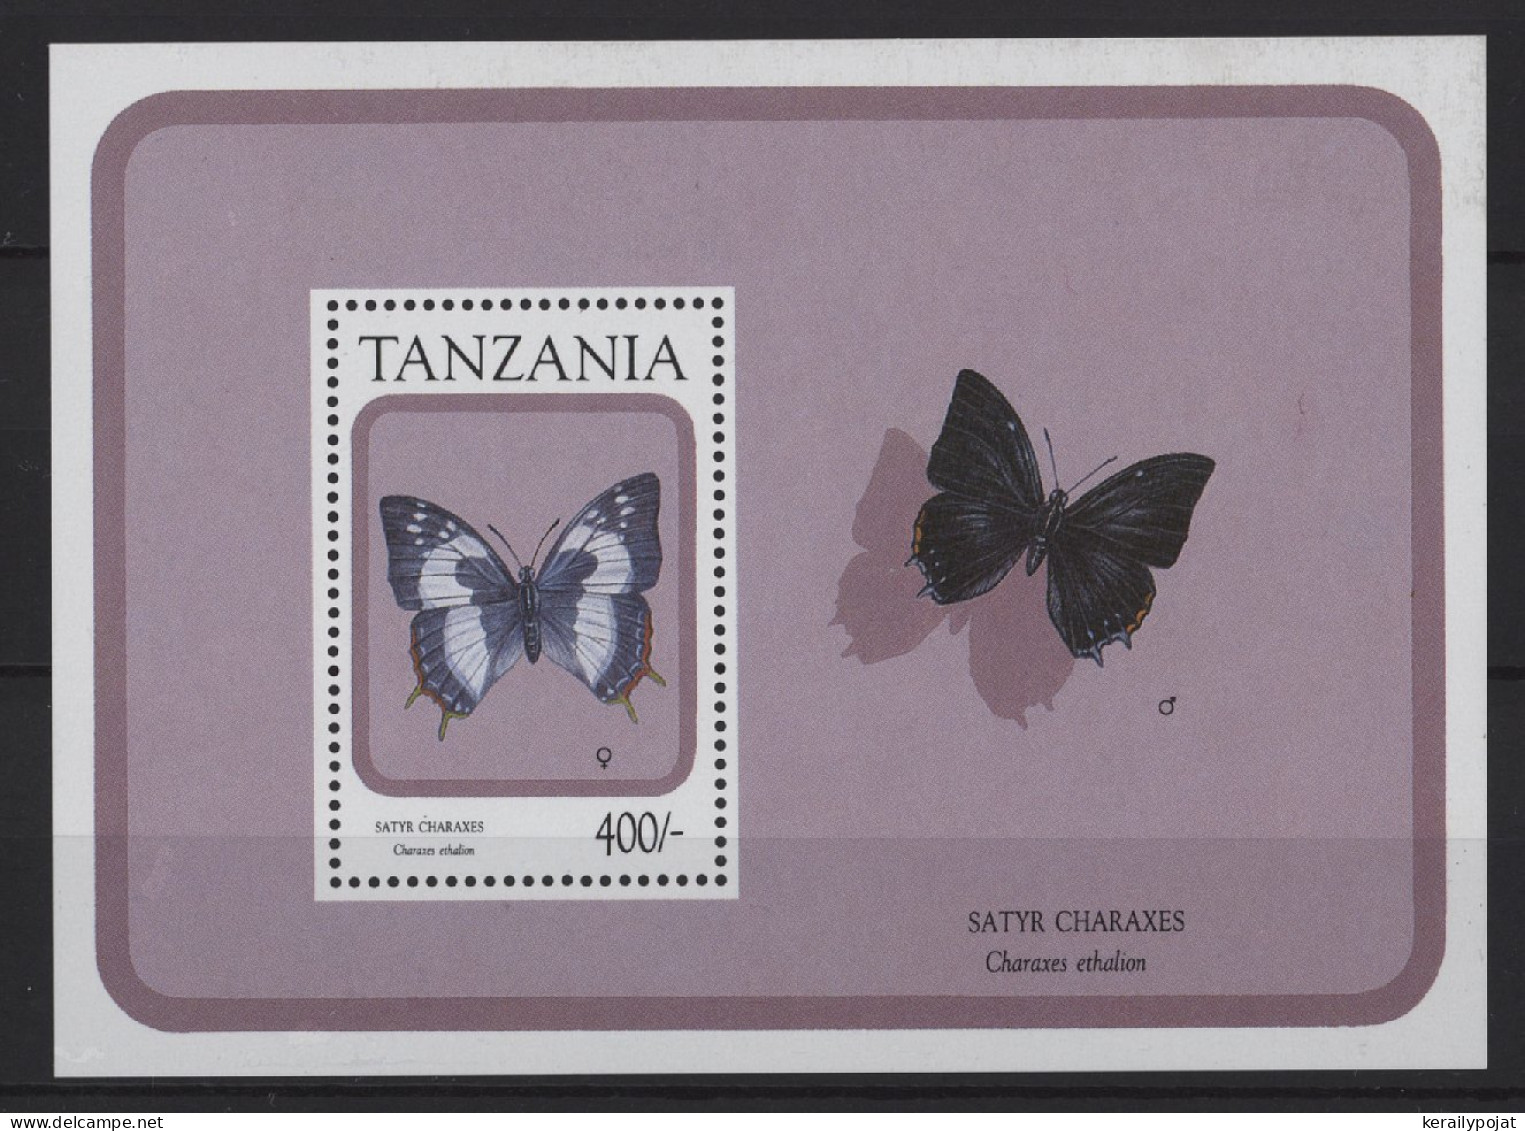 Tanzania - 1991 Butterflies Block (3) MNH__(TH-26872) - Tanzania (1964-...)